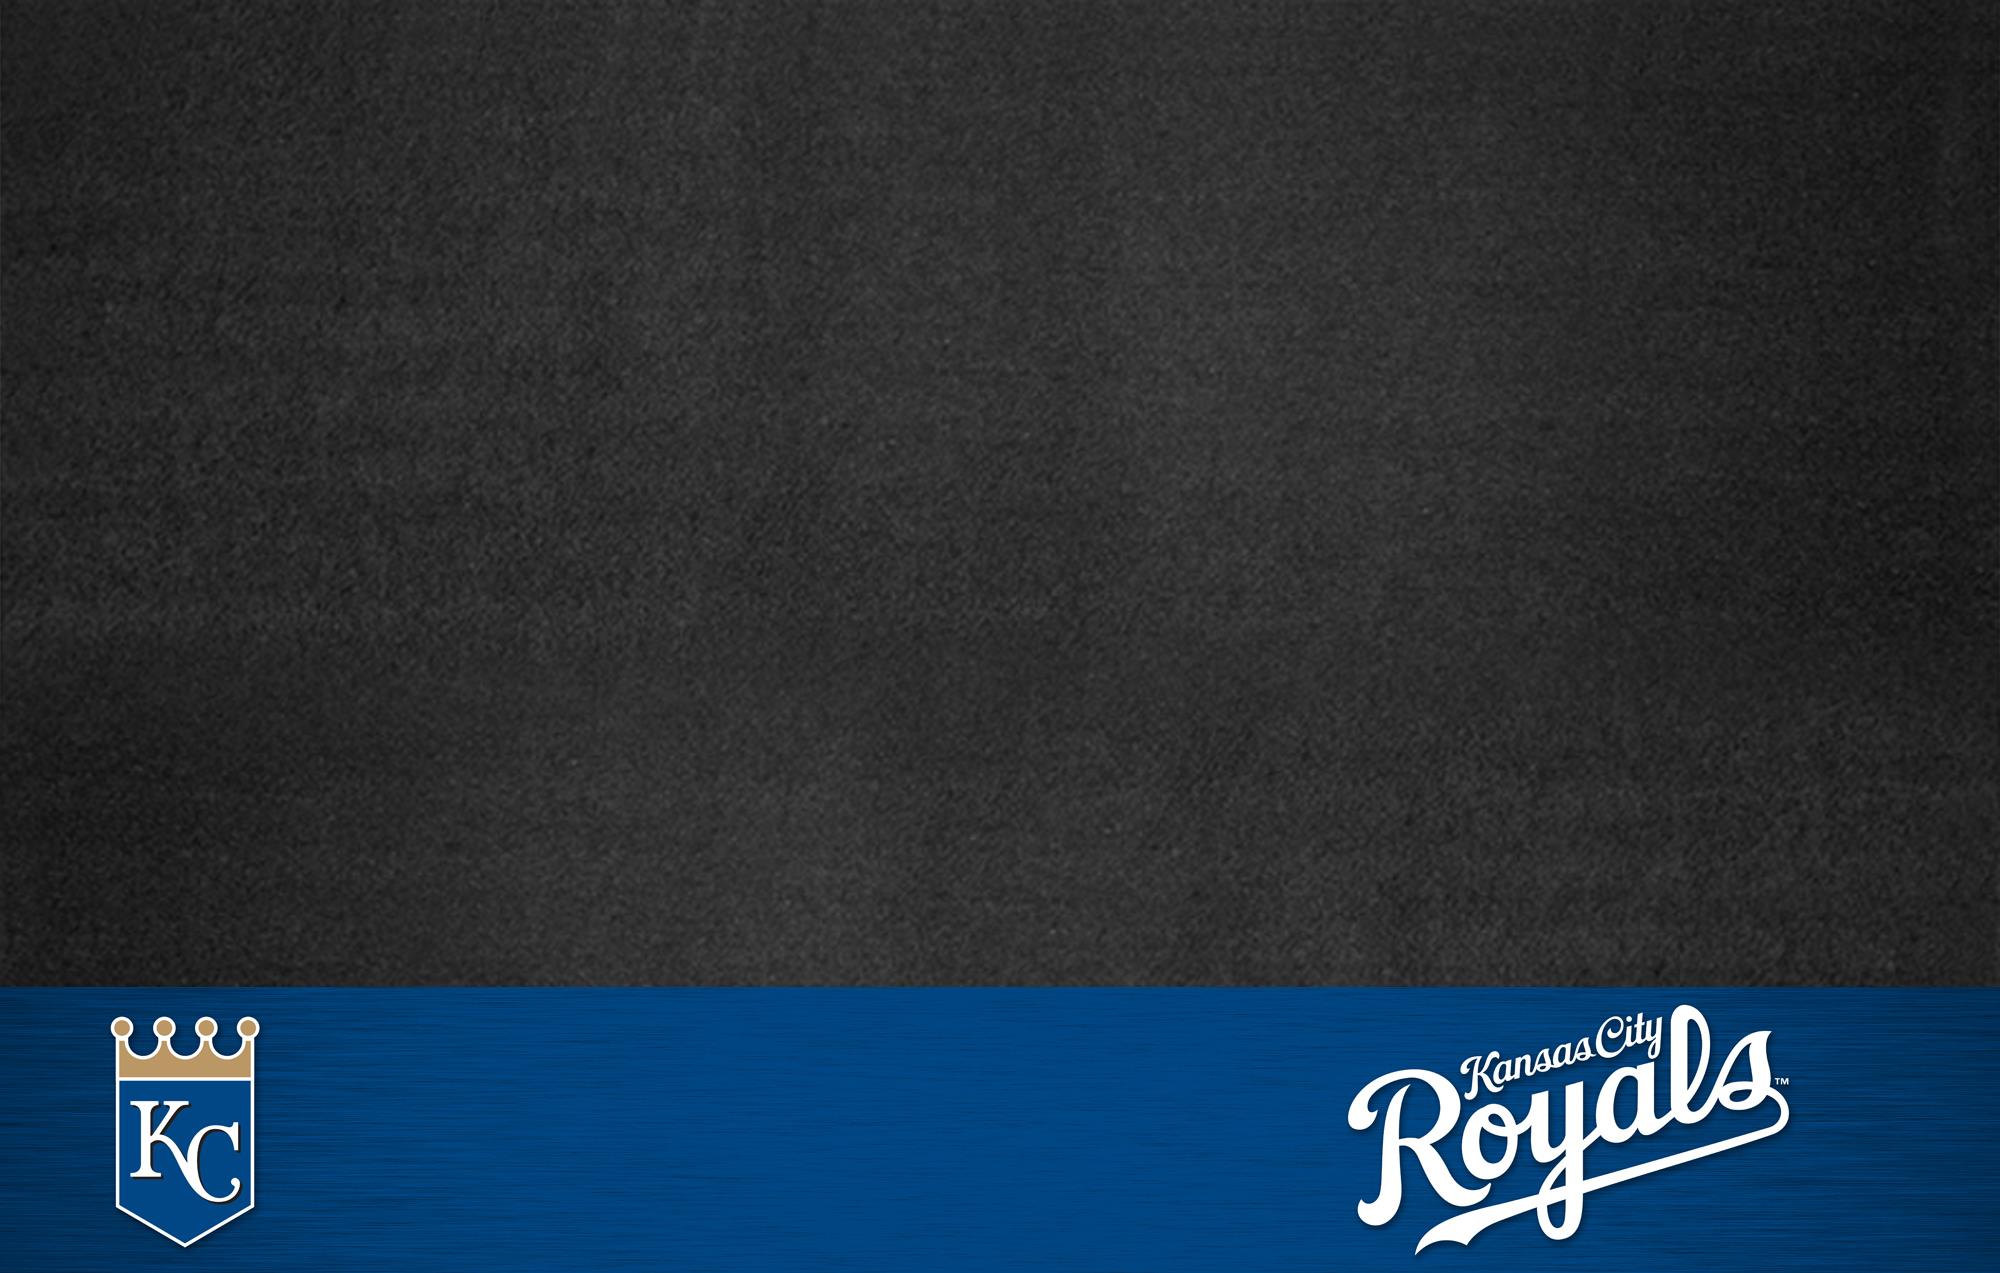 KANSAS CITY ROYALS mlb baseball 38 wallpaper background 2000x1273